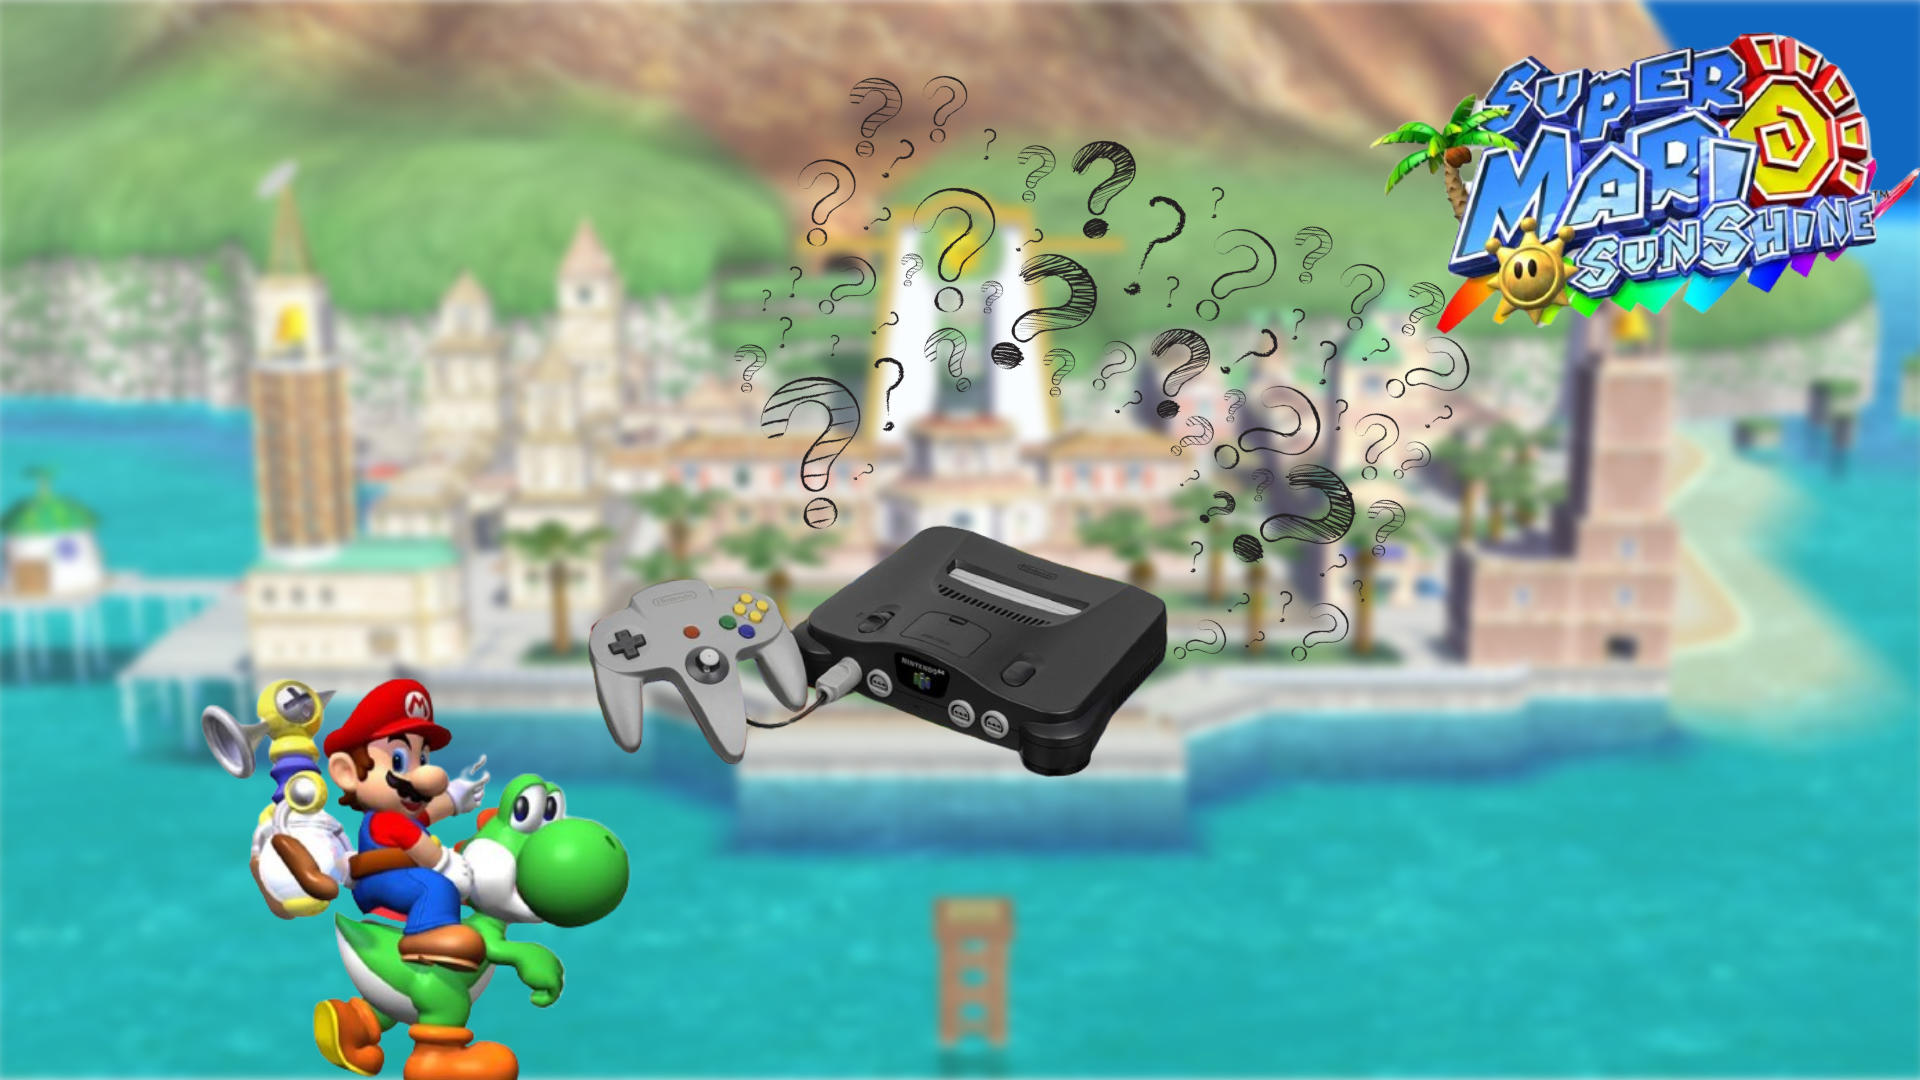 Nintendo: Moment mal, Super Mario Sunshine auf dem N64?